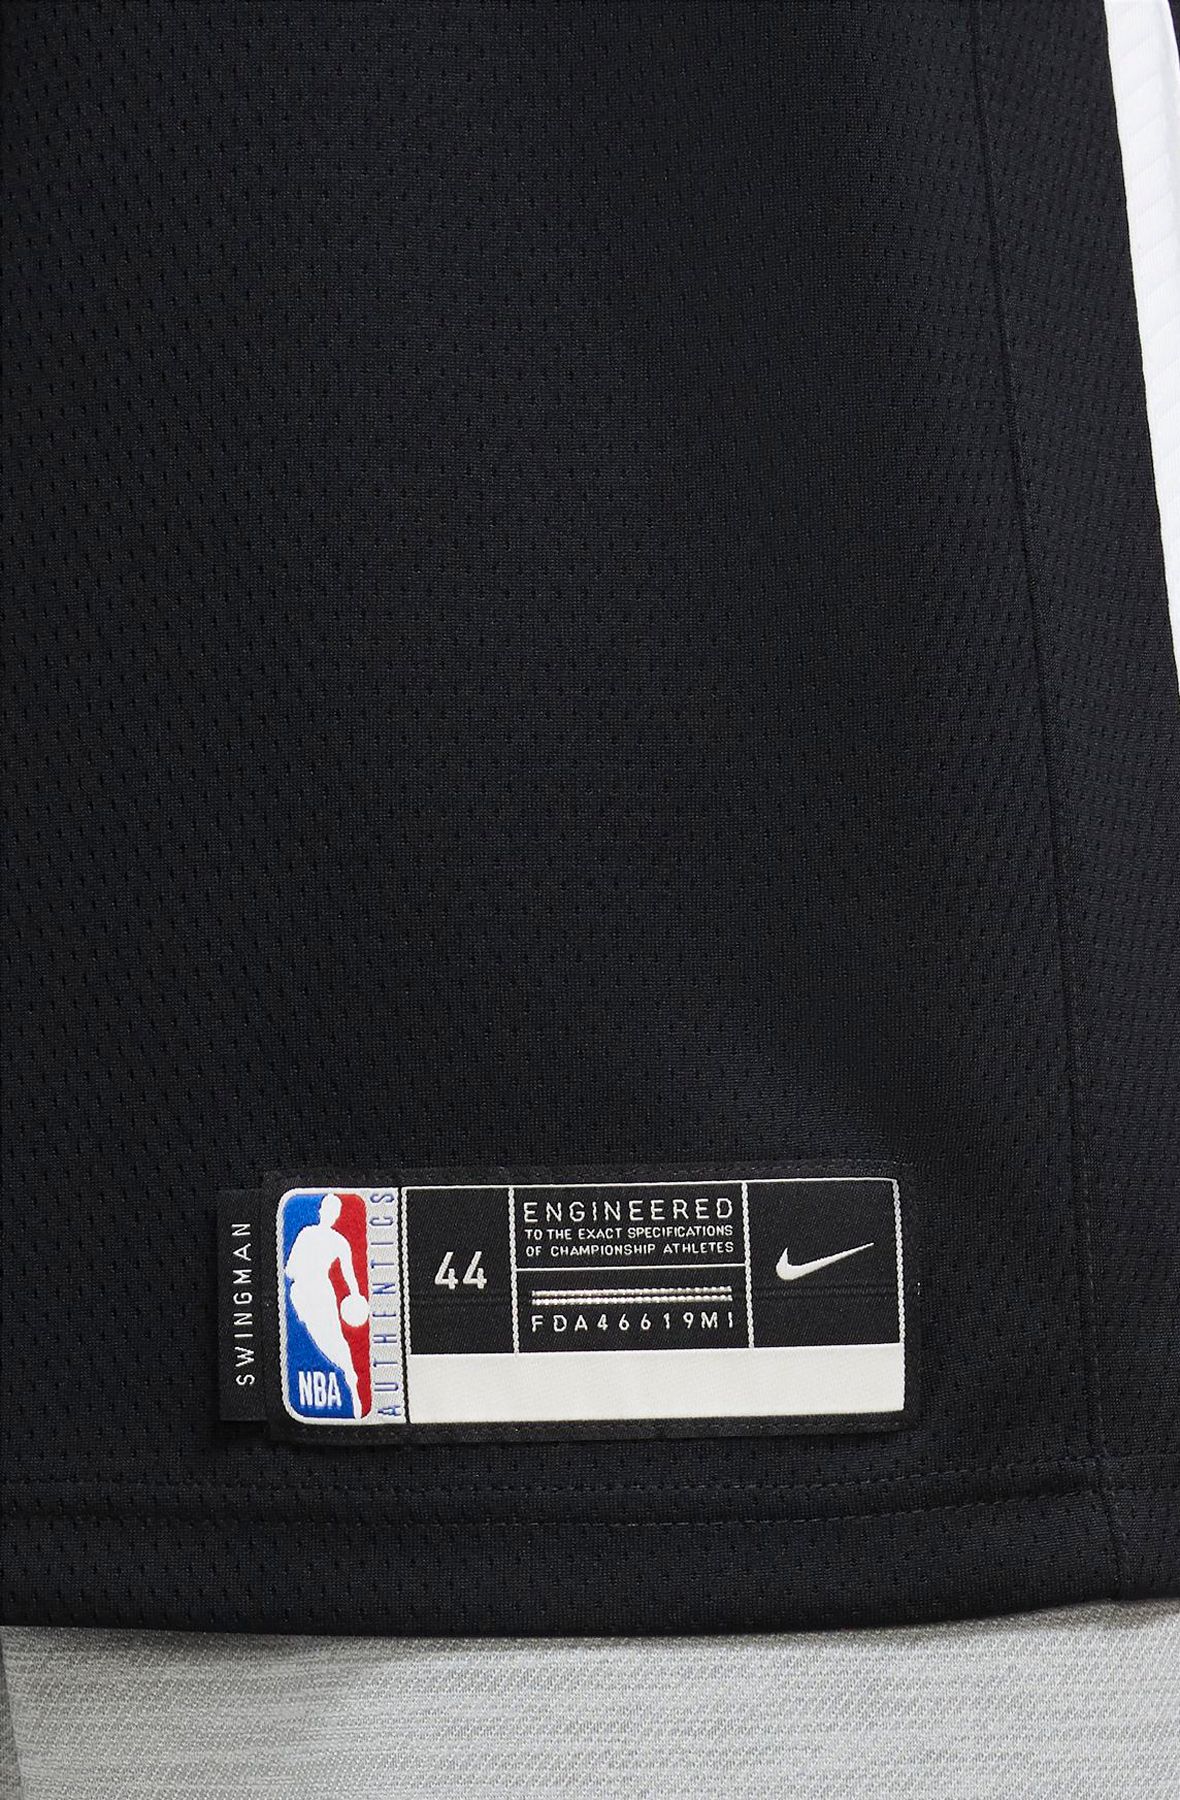 Rockets Icon Edition 2020 Nike NBA Swingman Jersey